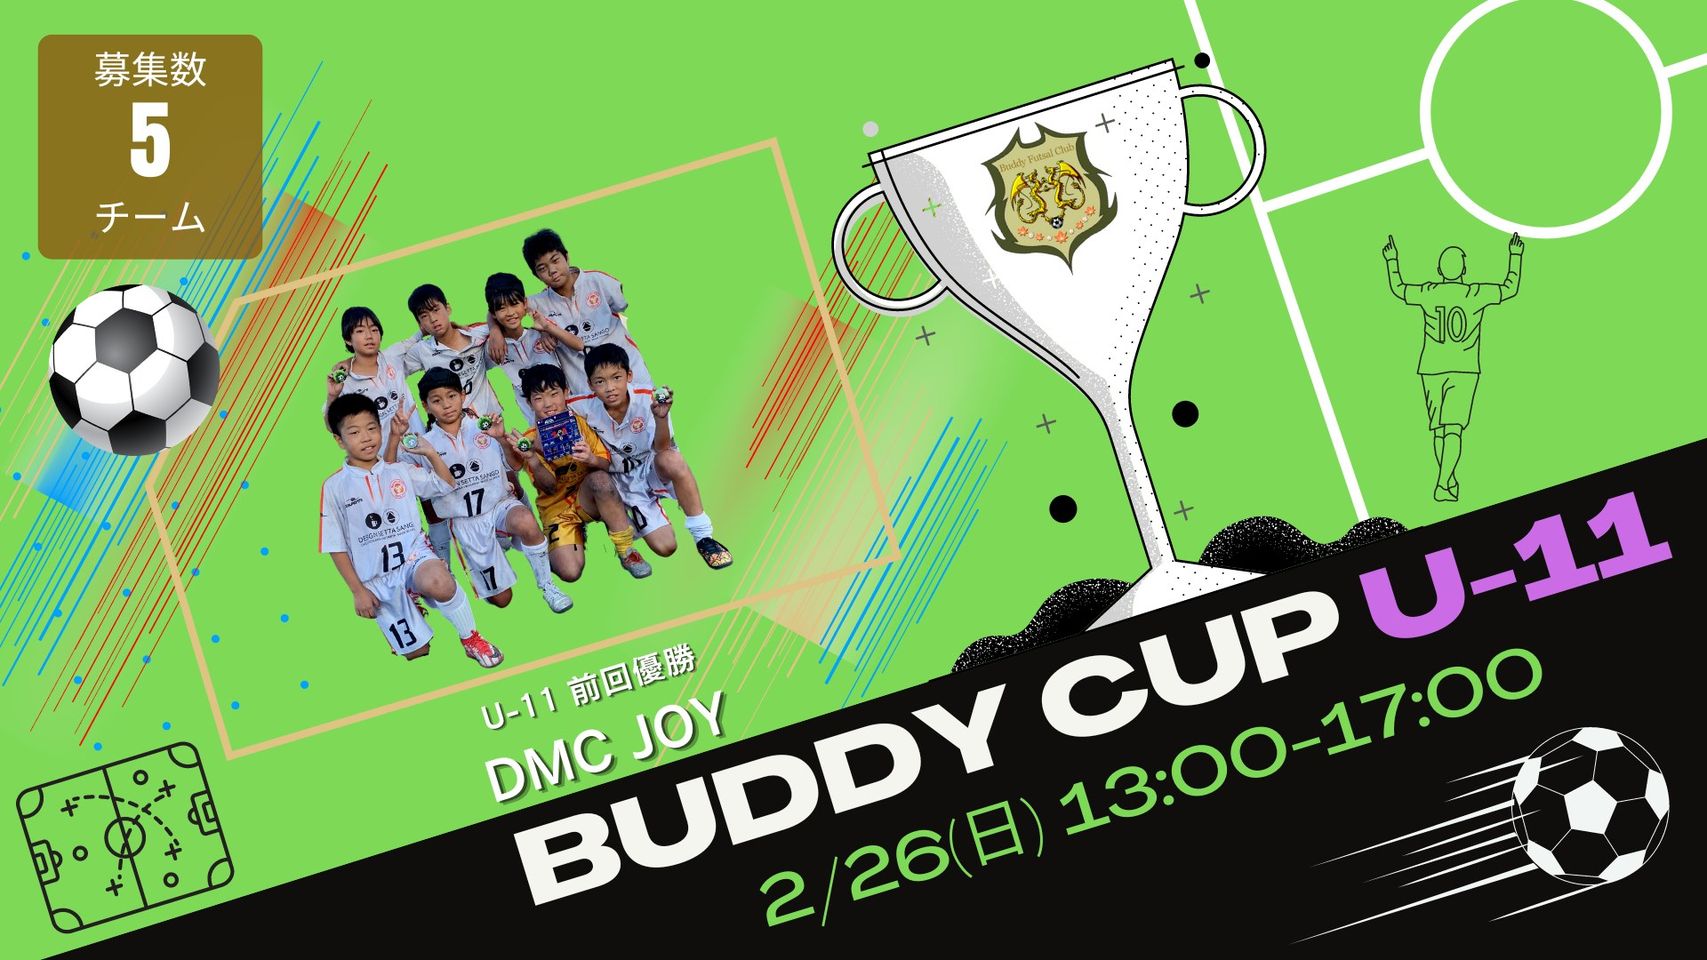 【Buddy Cup U-11】